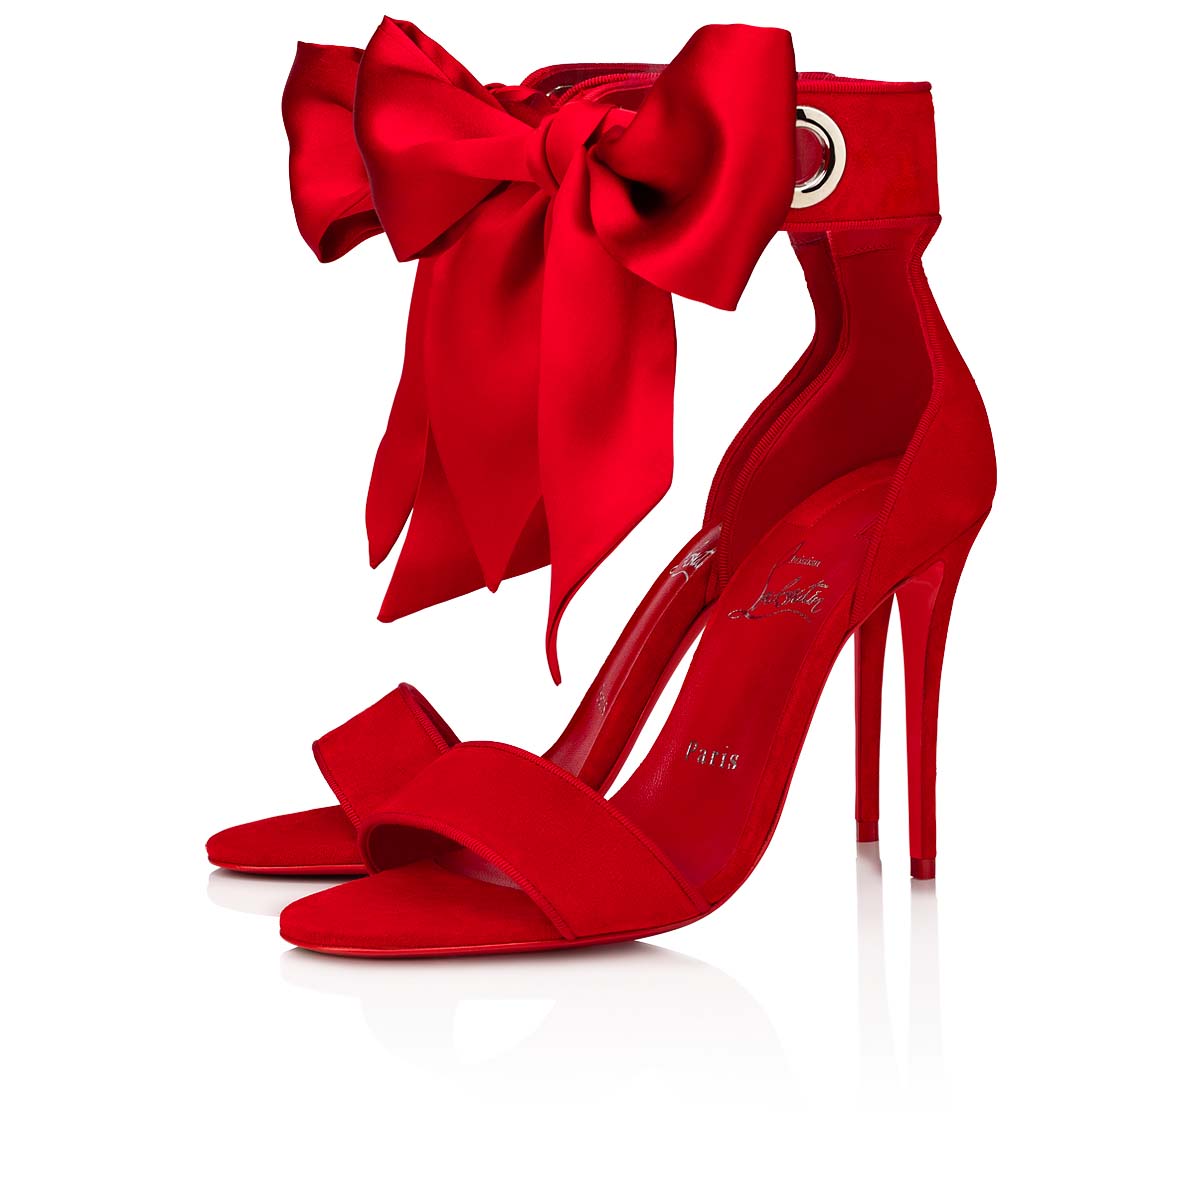 Torrida 100 Red Veau velours - Shoes - Women - Christian Louboutin